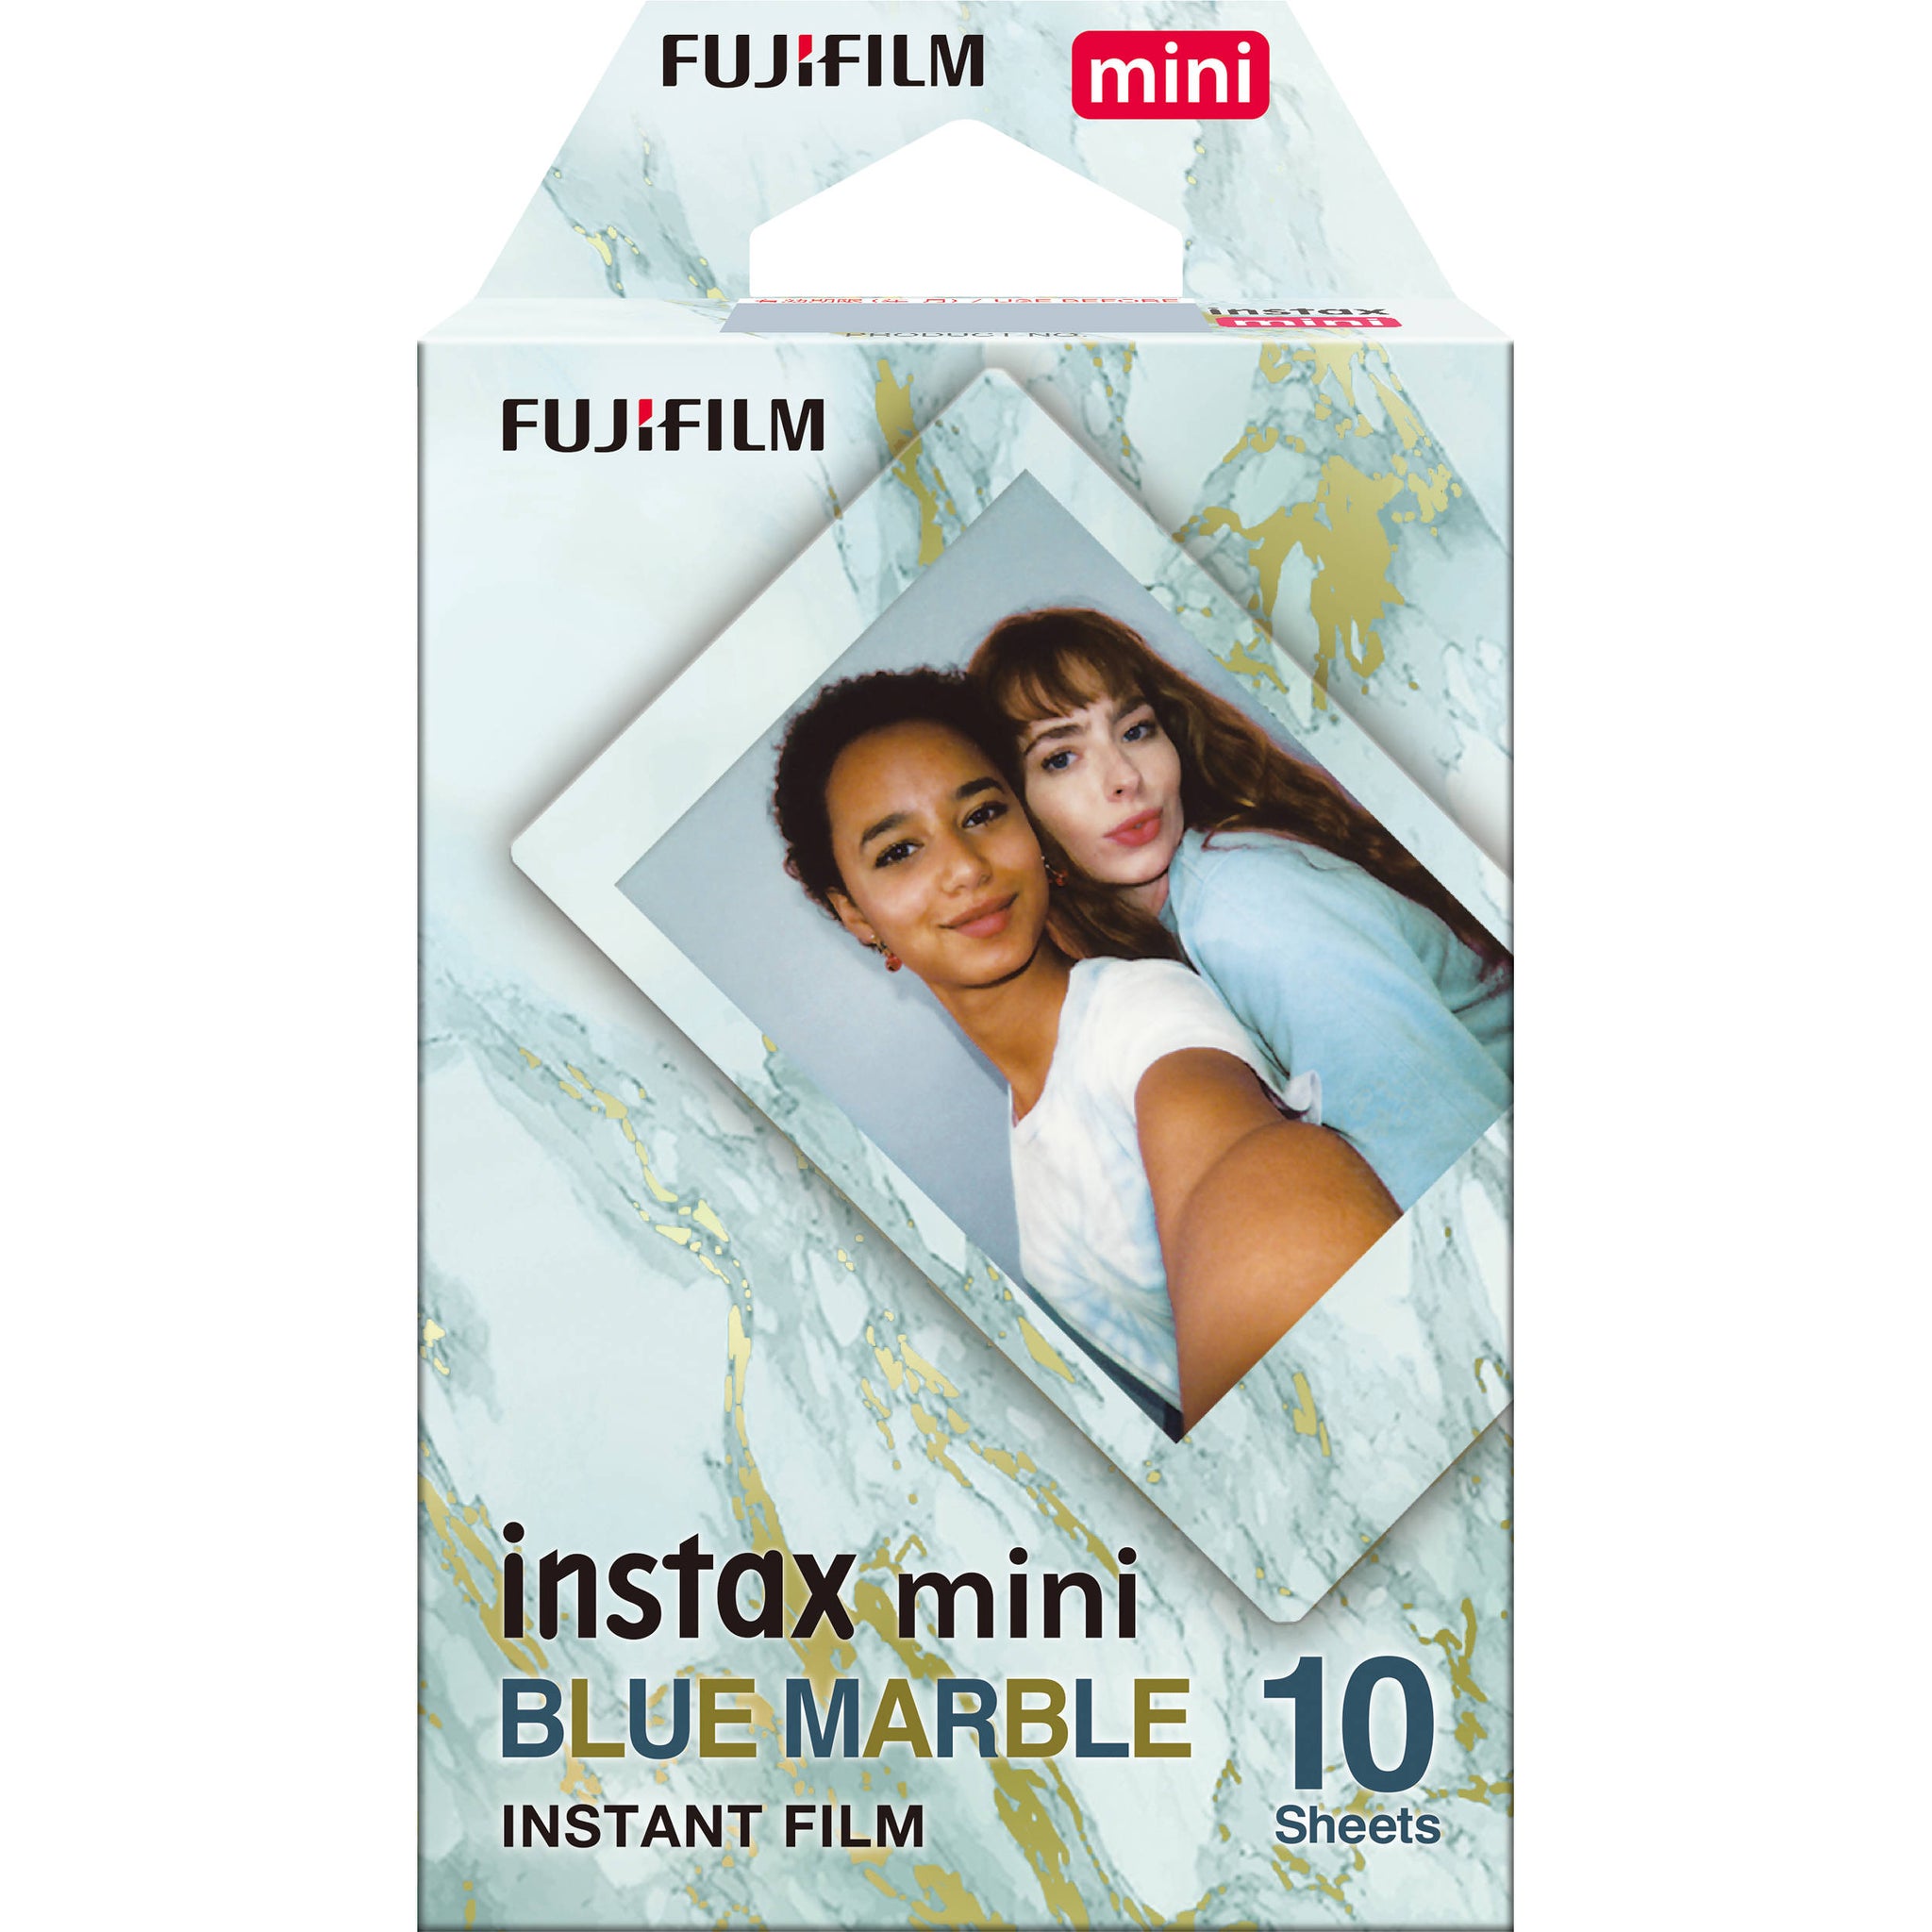 Fujifilm Instax Mini 10X1 blue marble Instant Film with Instax Time Photo Album 64 Sheets (ice white)